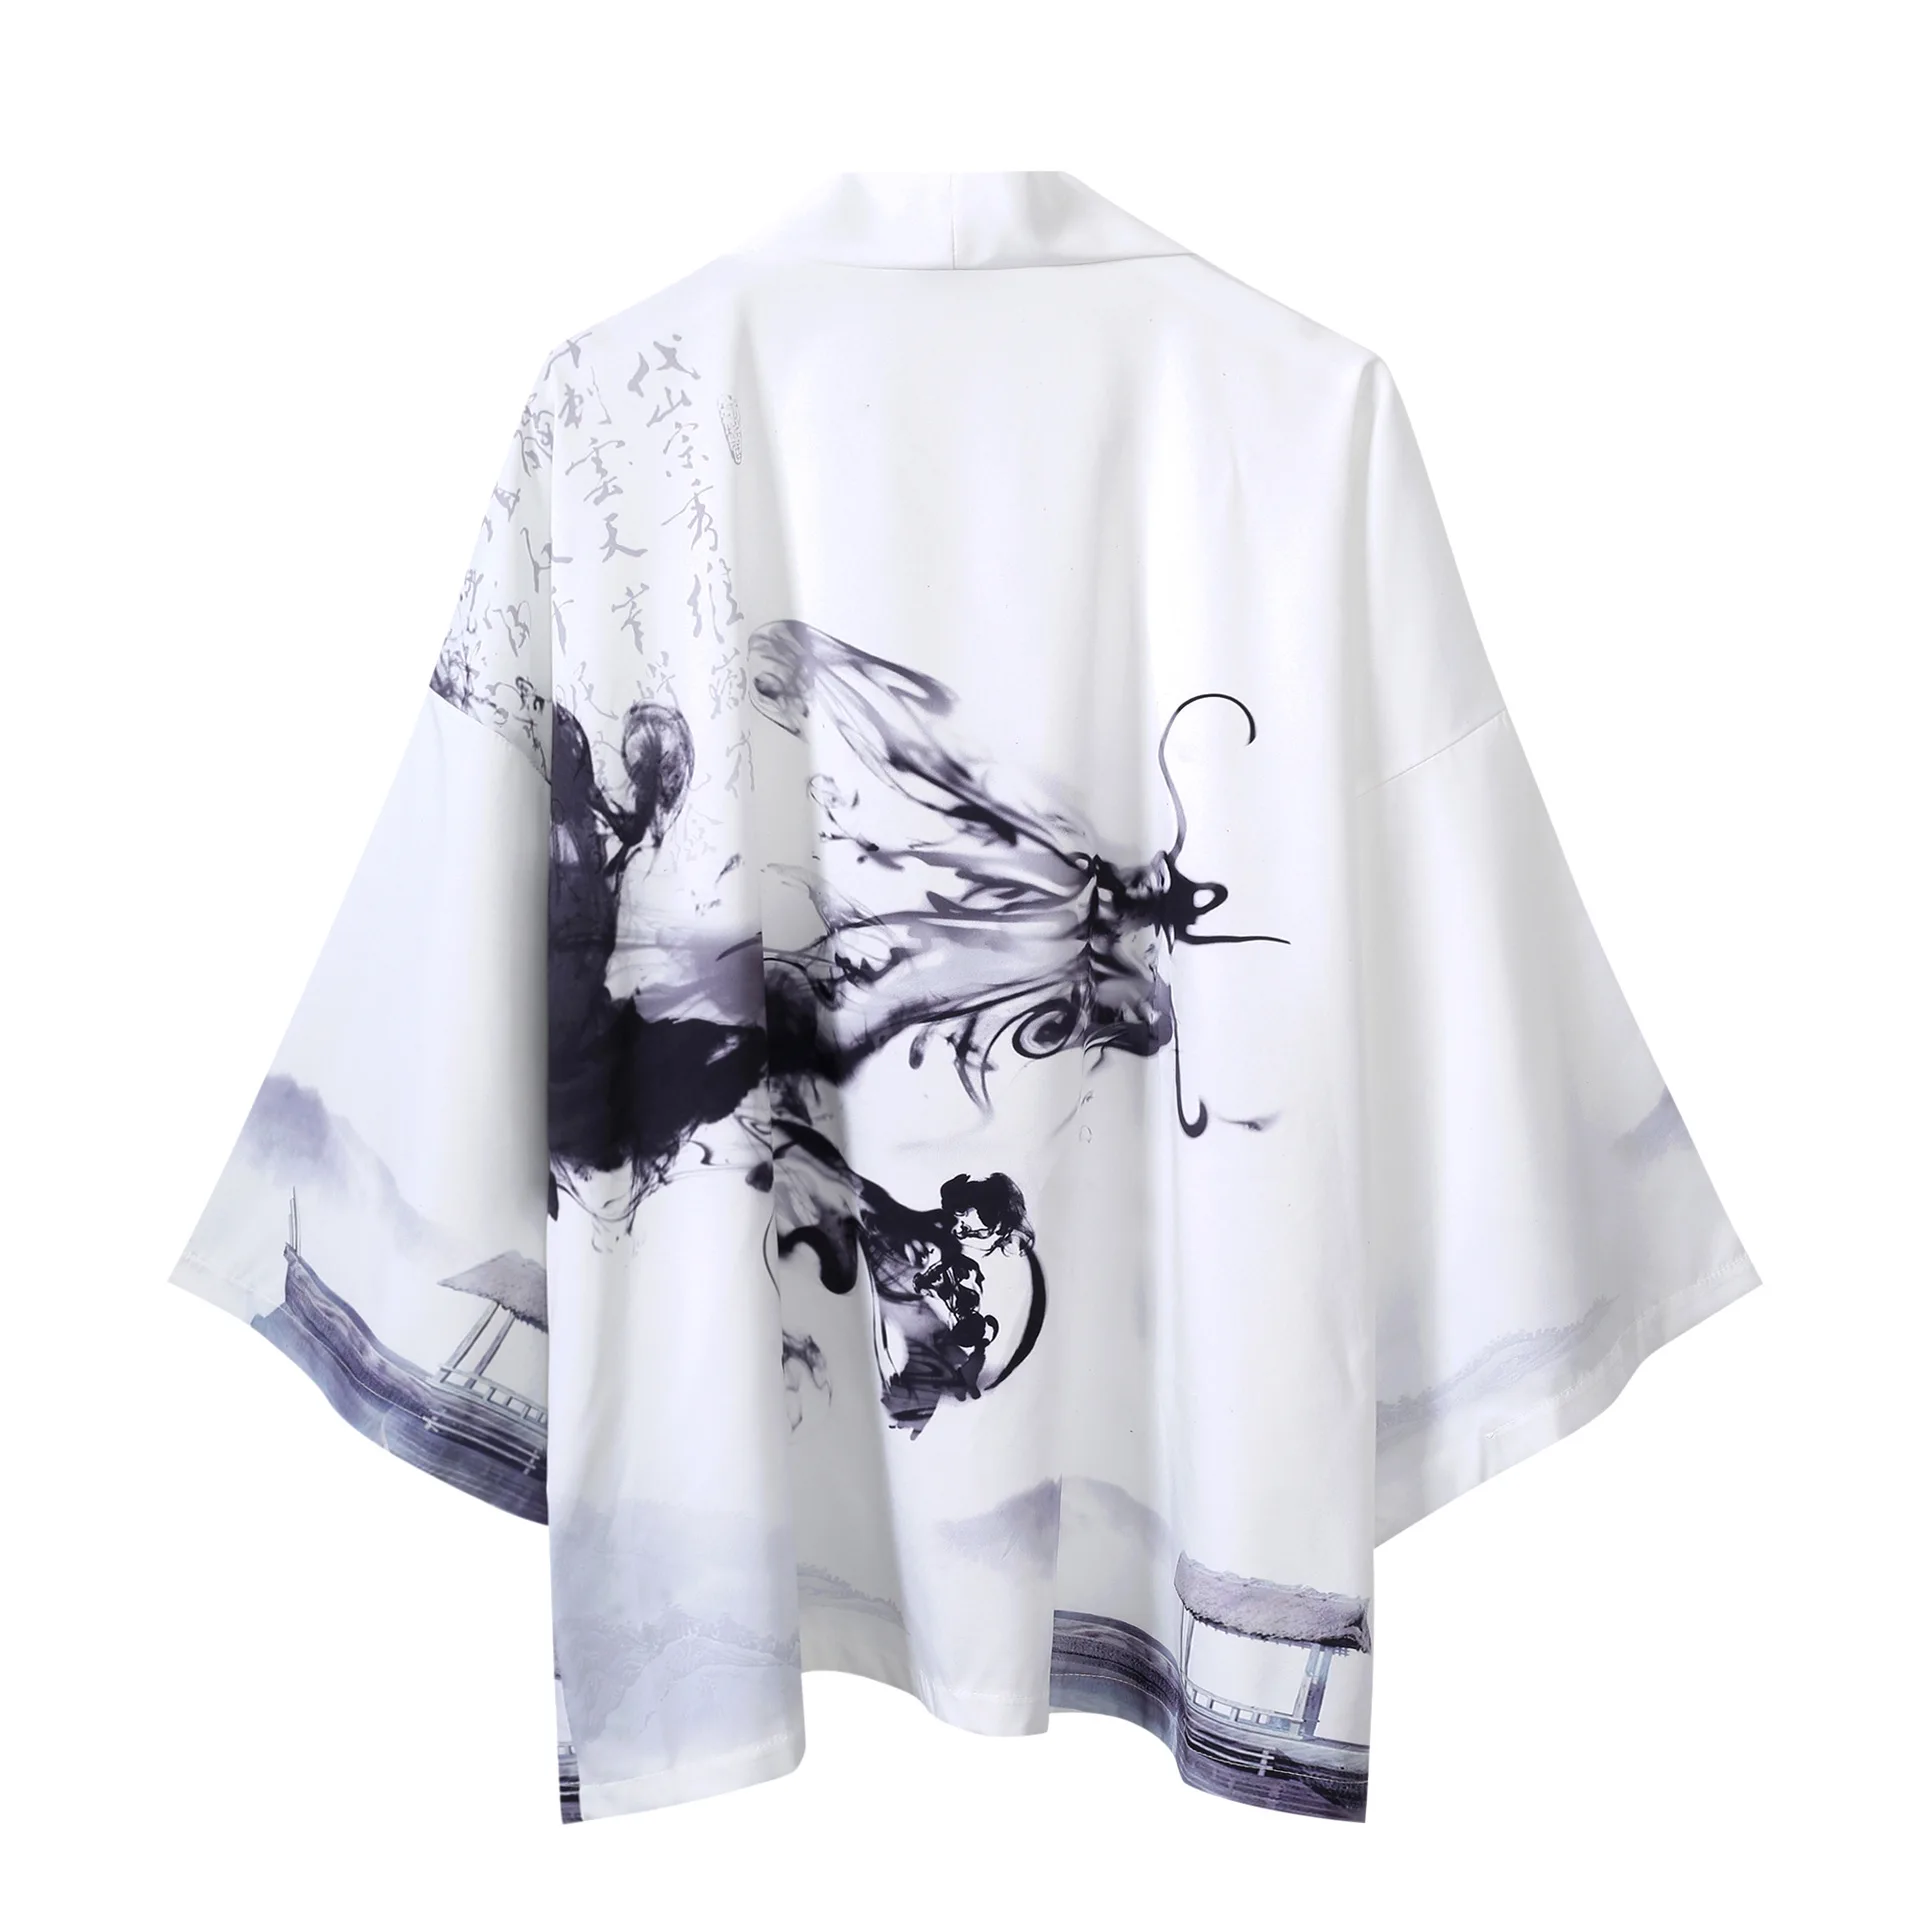 Традиционная мужская одежда Азиатский Дракон юката Самурай хаори японский стиль Ukiyo кардиган Харадзюку кимоно платье - Цвет: White 5